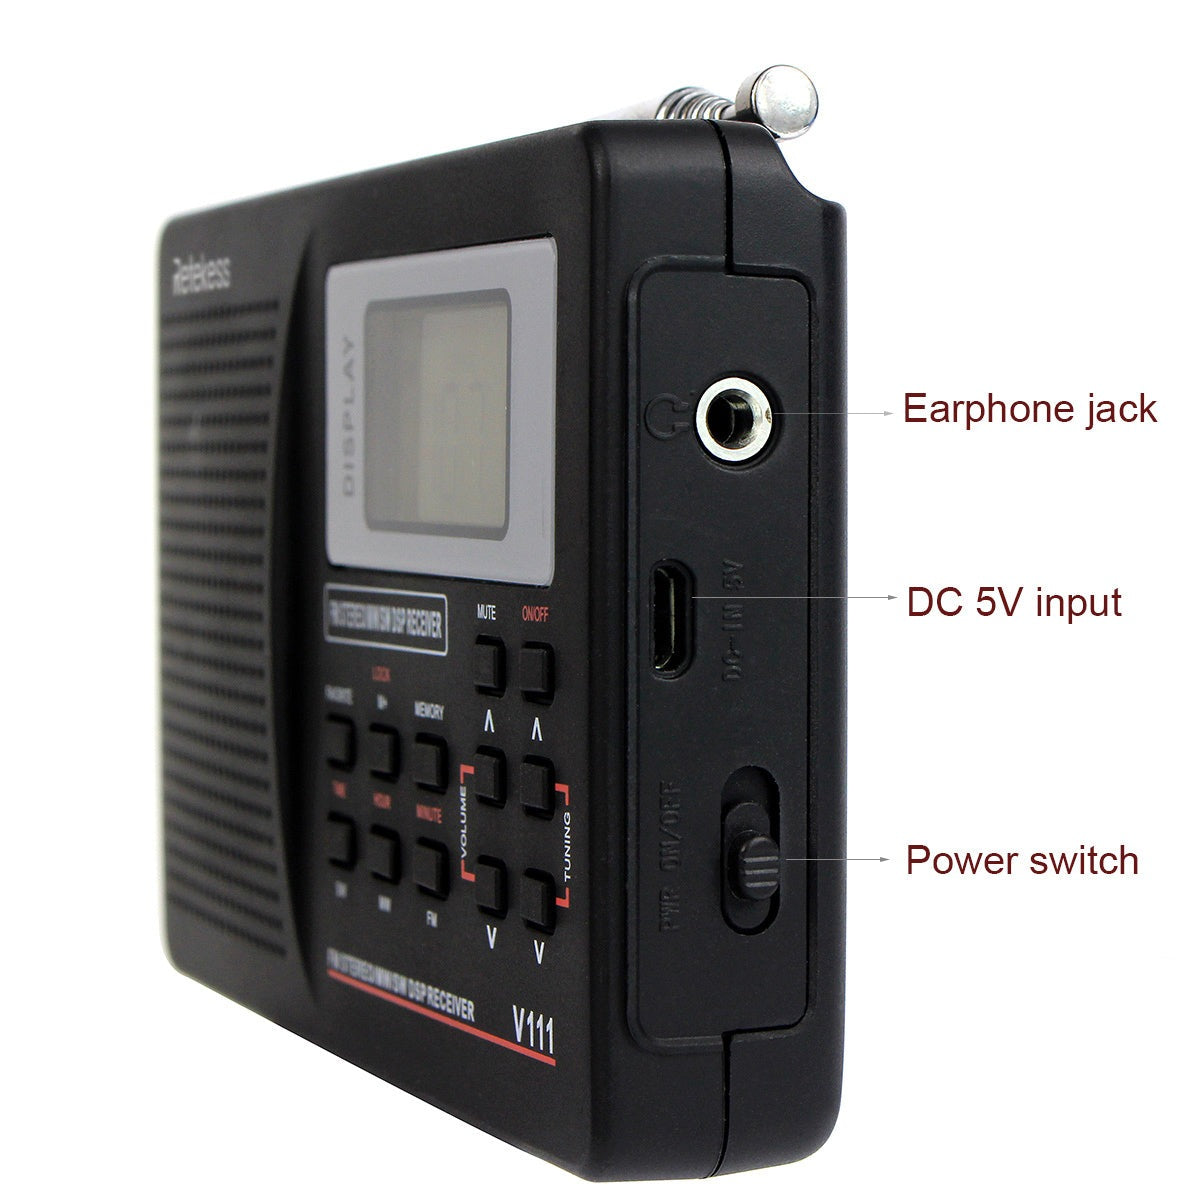 Retekess V111 Portable Radio with Digital Alarm Clock Sleep Timer